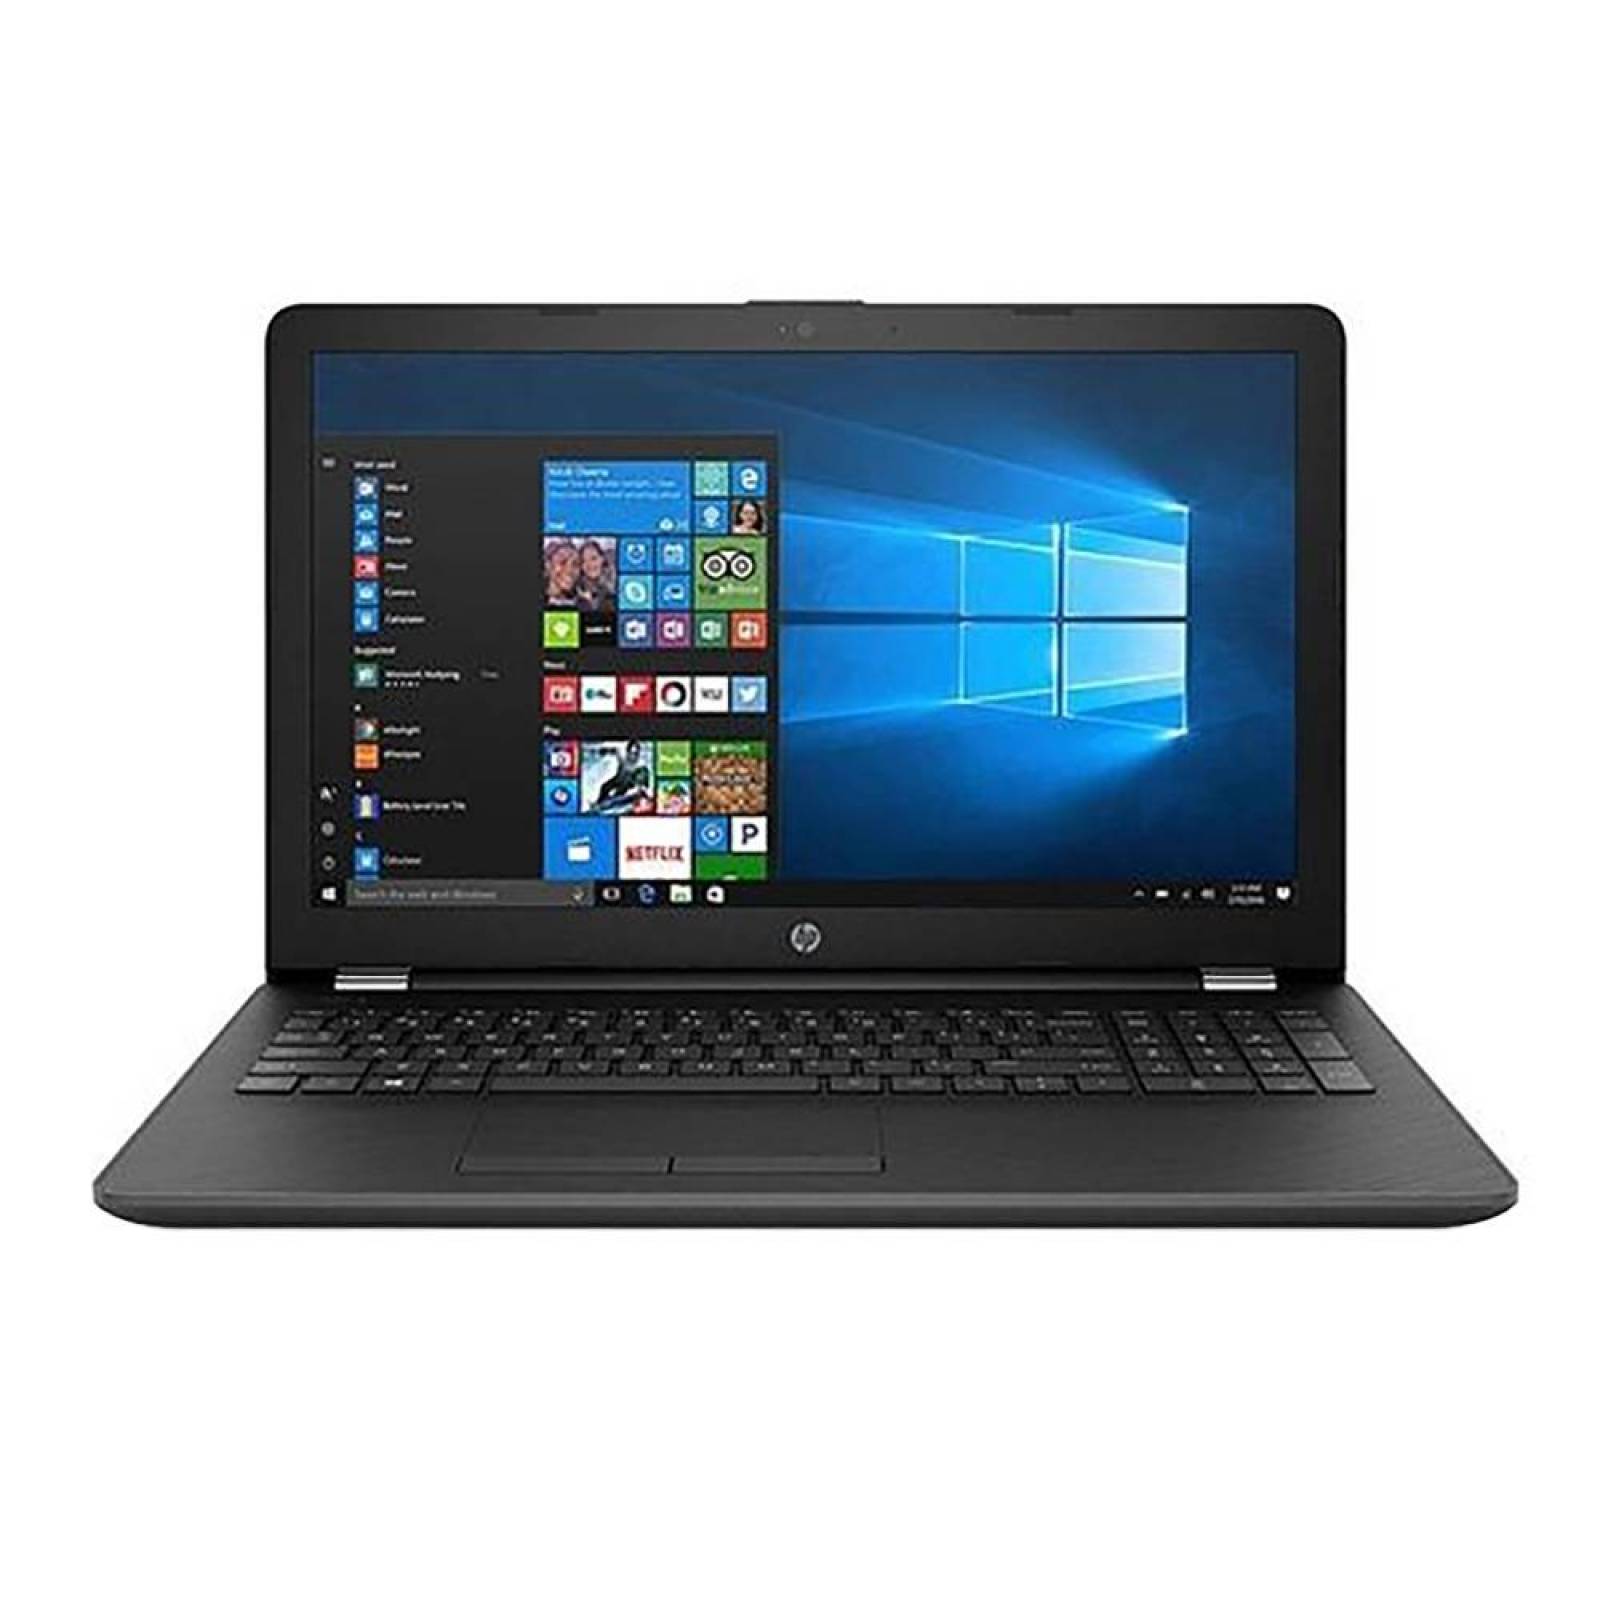 Laptop HP 15.6 2TB/8GB i7-7500U DVD 15-BS078 - Reacondicionado